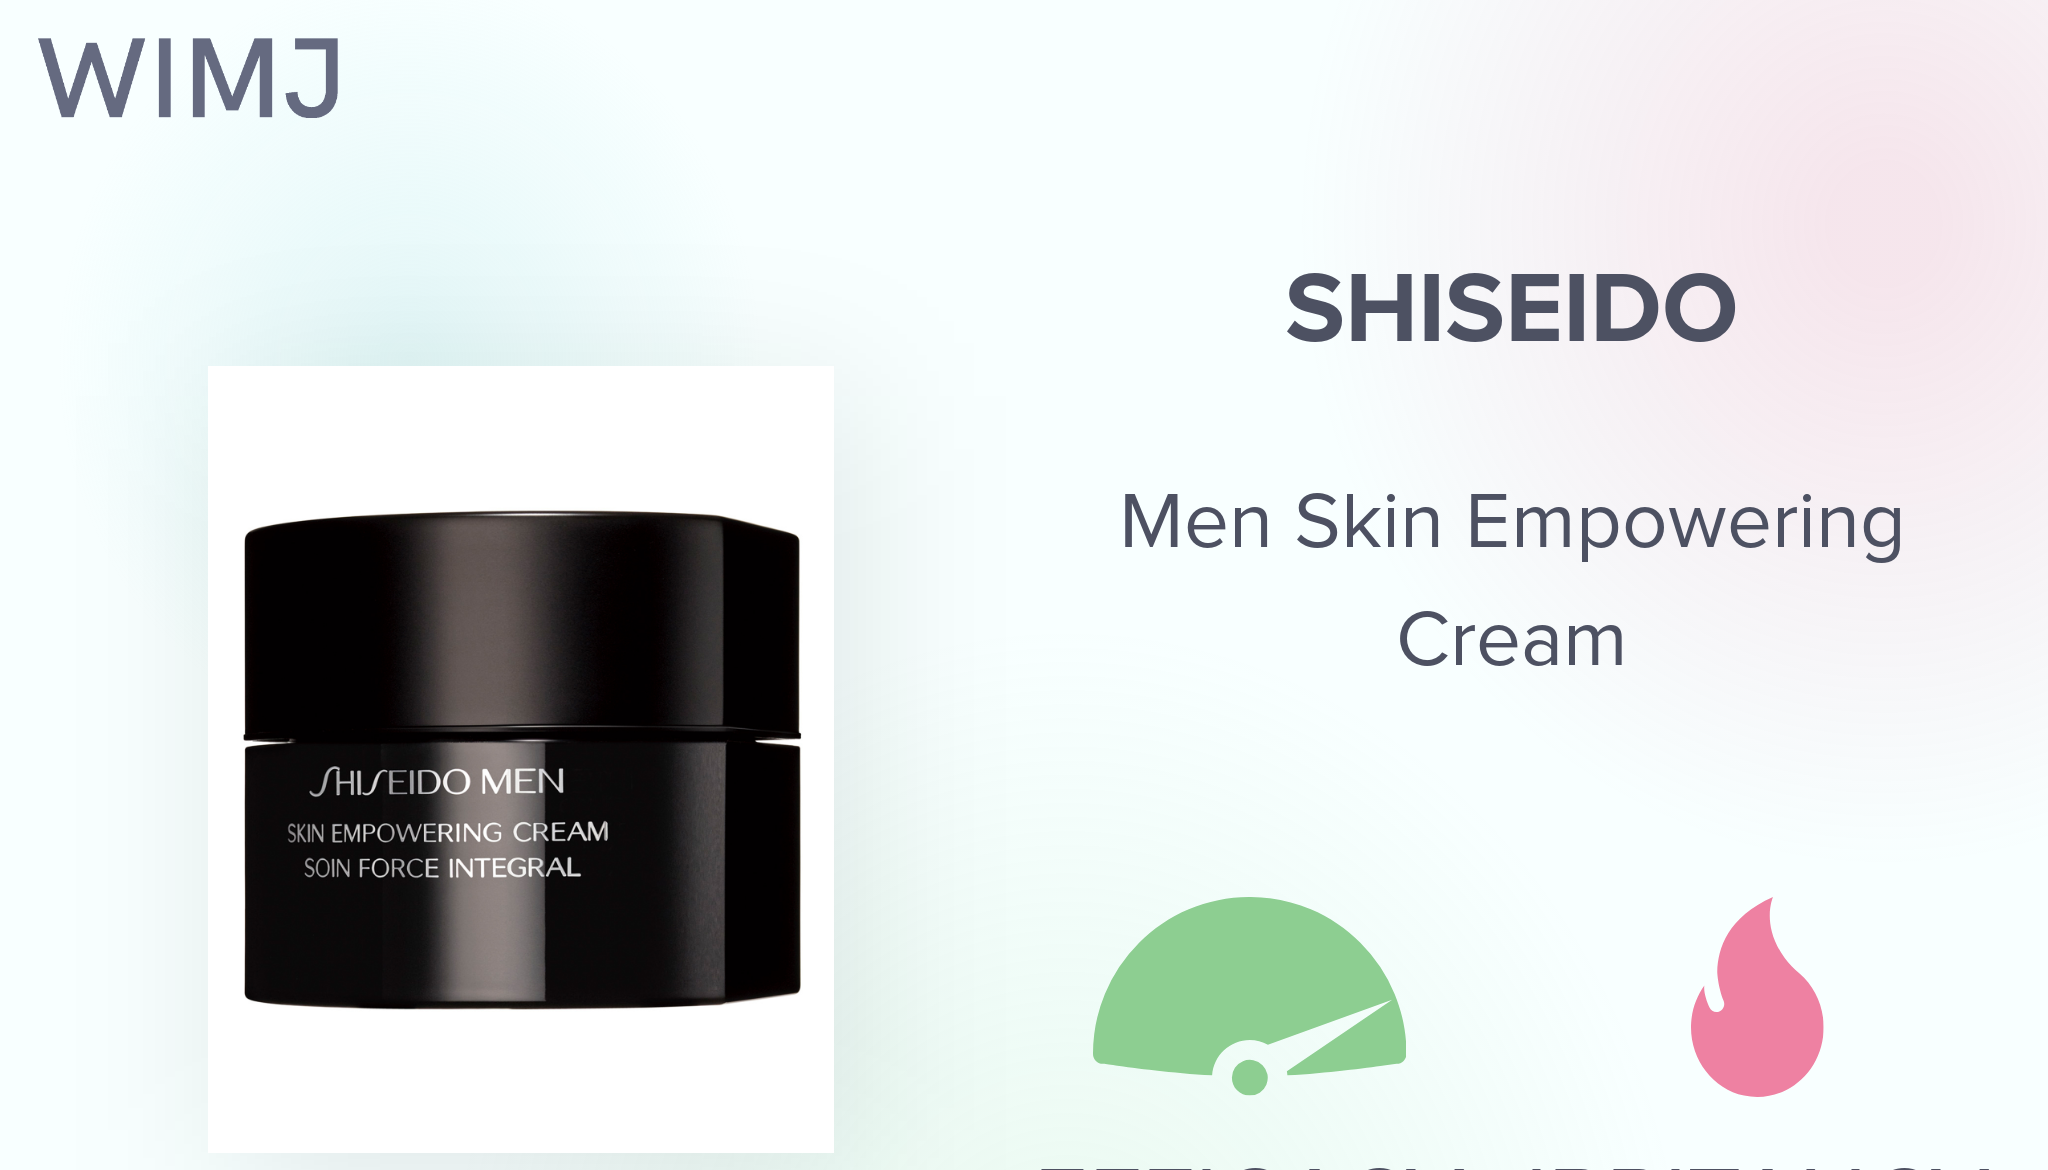 Review: Shiseido - Men Skin Empowering Cream - WIMJ